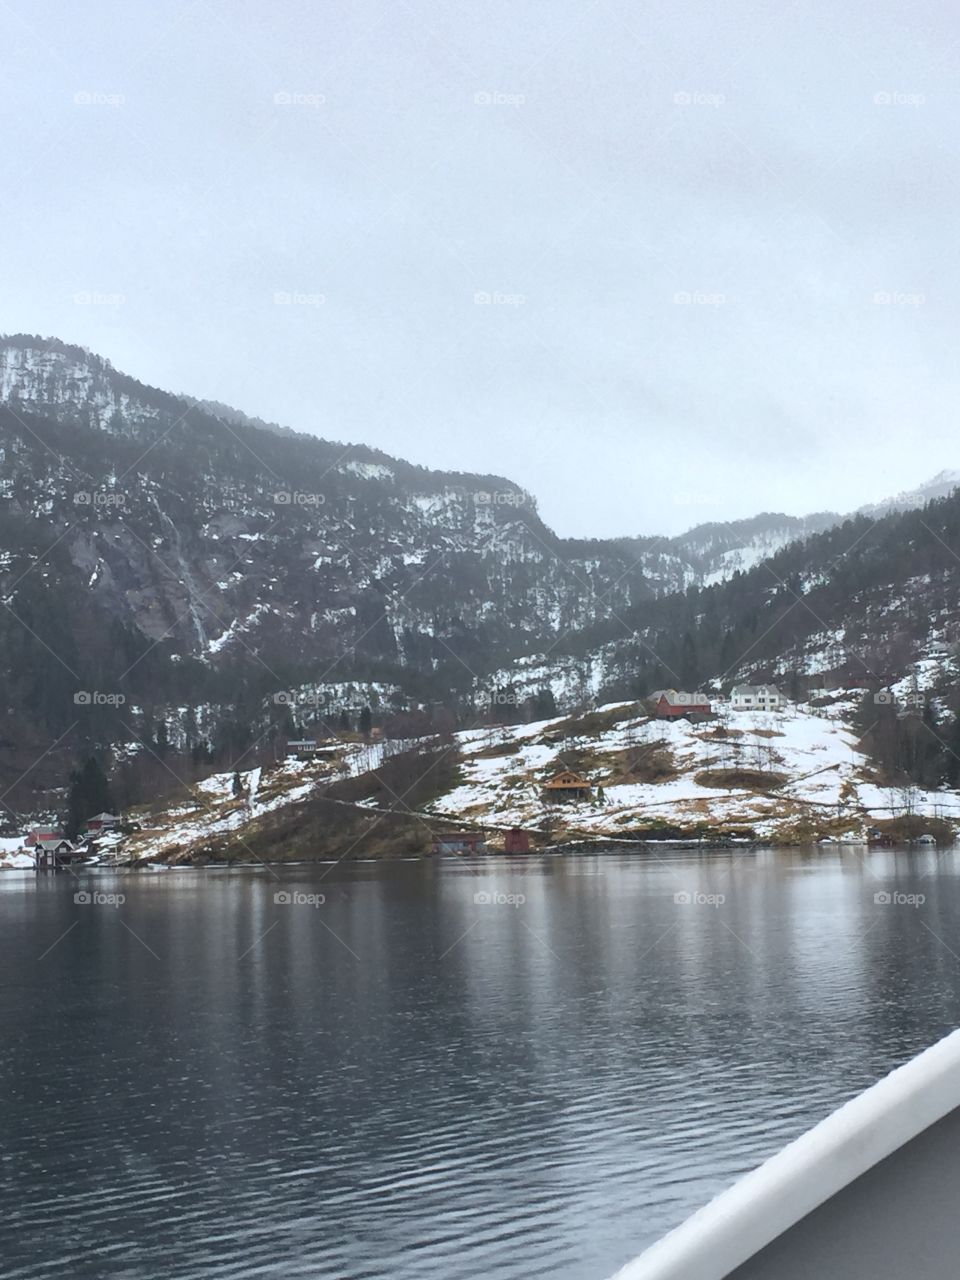 Water, Mountain, Travel, Landscape, Snow